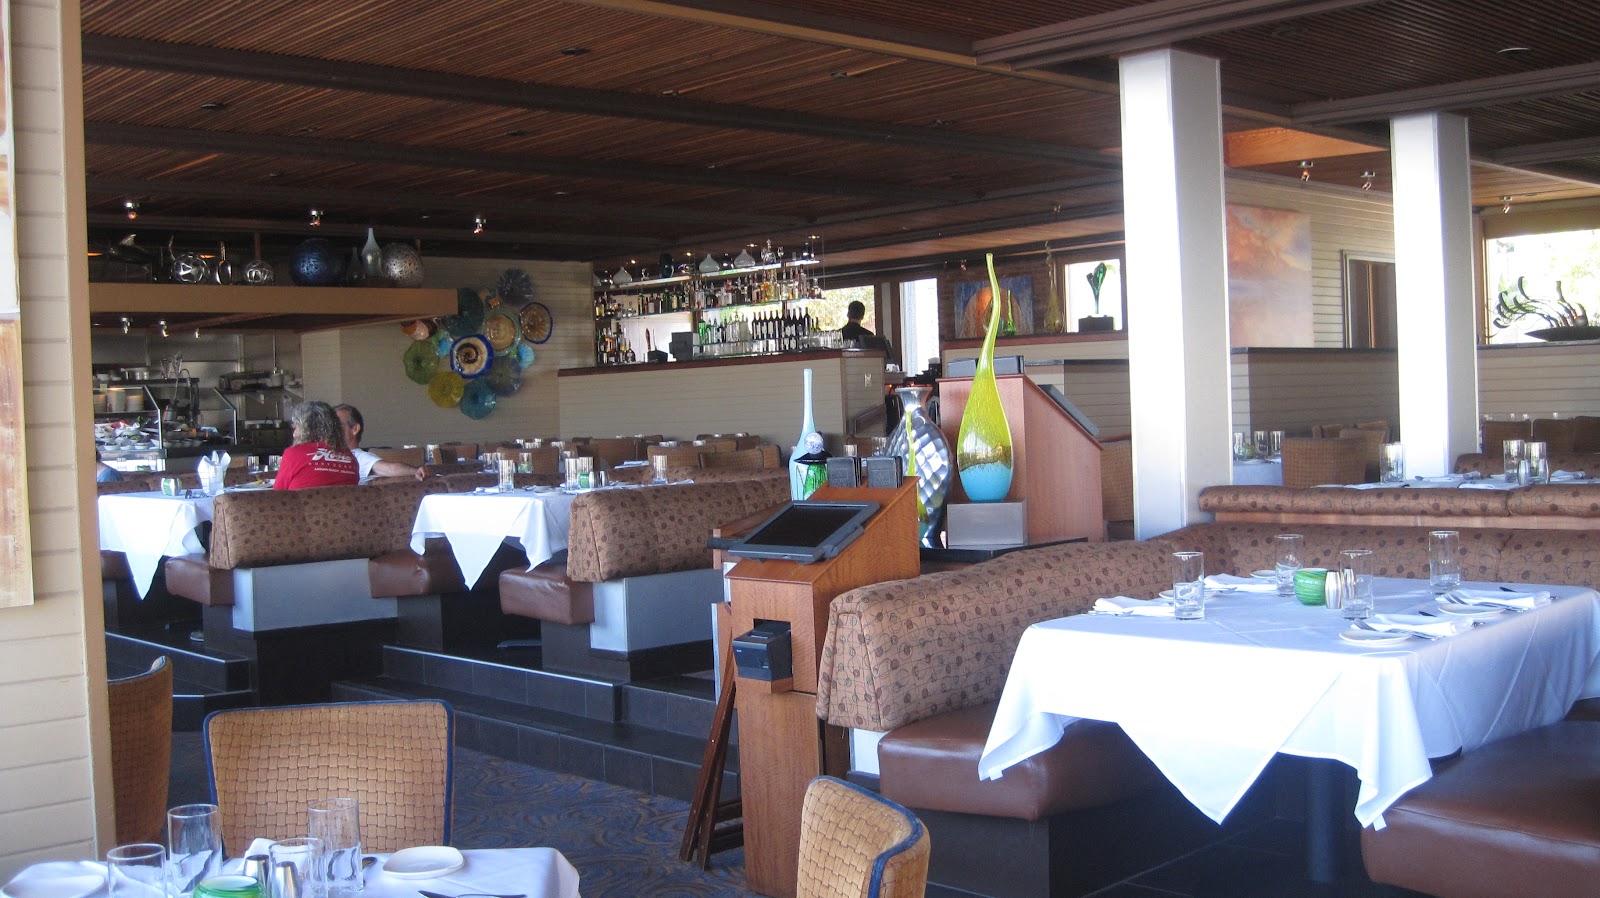 Chart House Restaurant Marina Del Rey